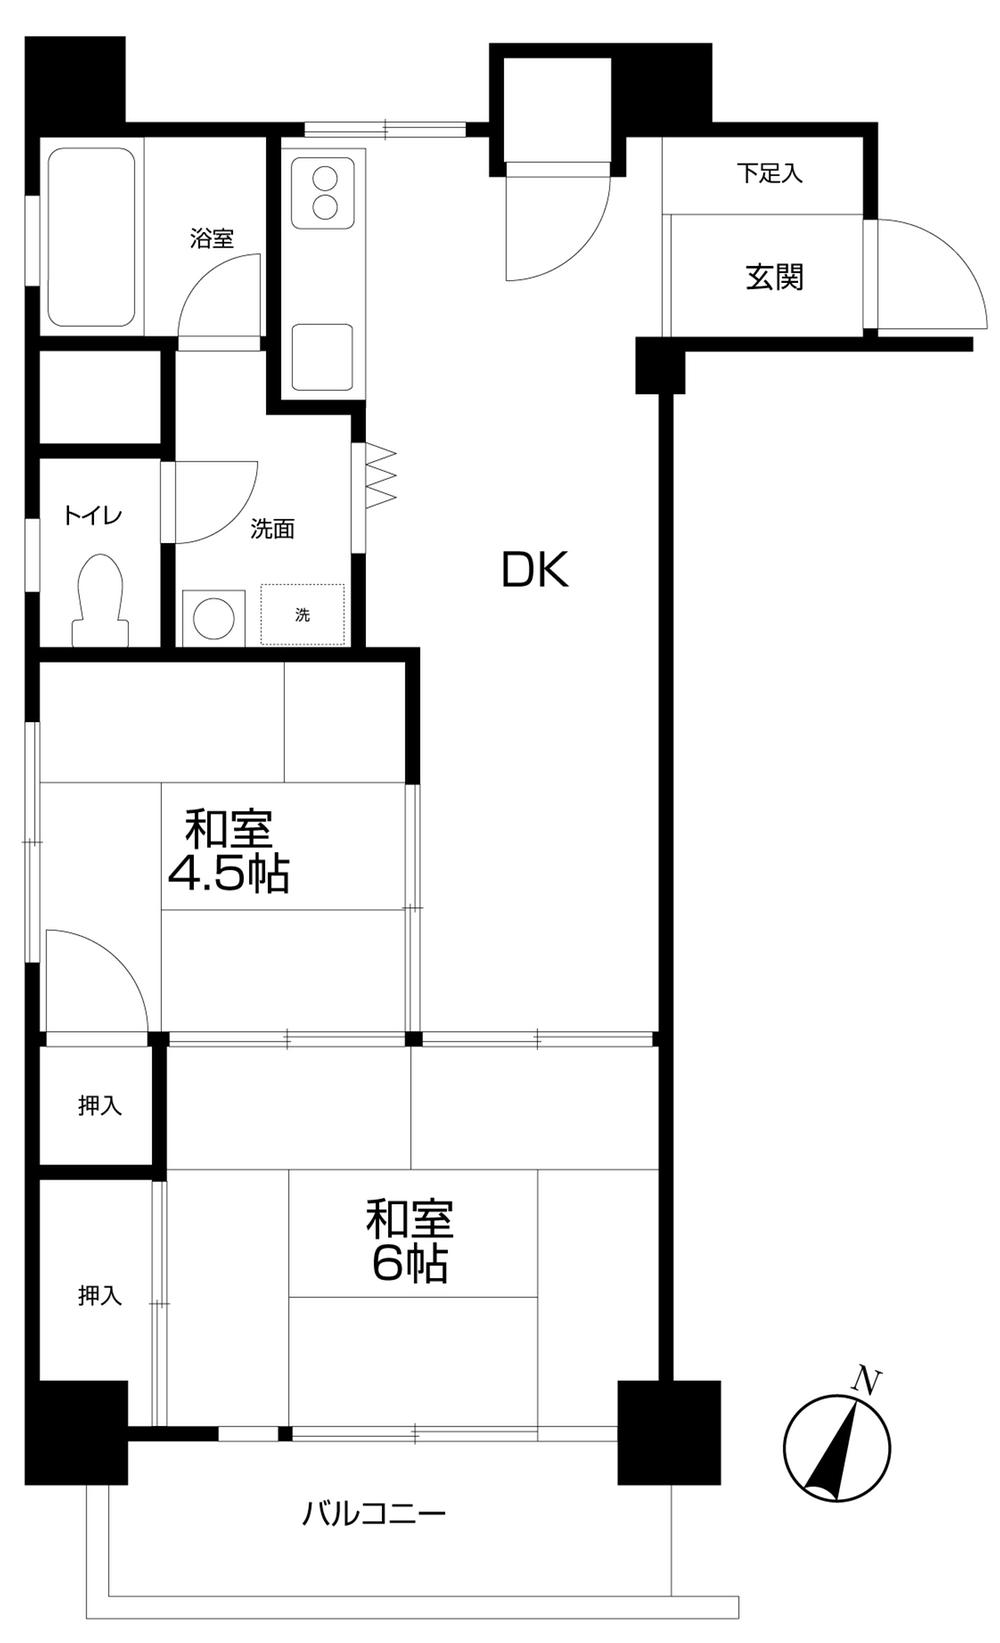 Floor plan. 2DK, Price 13.8 million yen, Occupied area 43.35 sq m , Balcony area 4.8 sq m